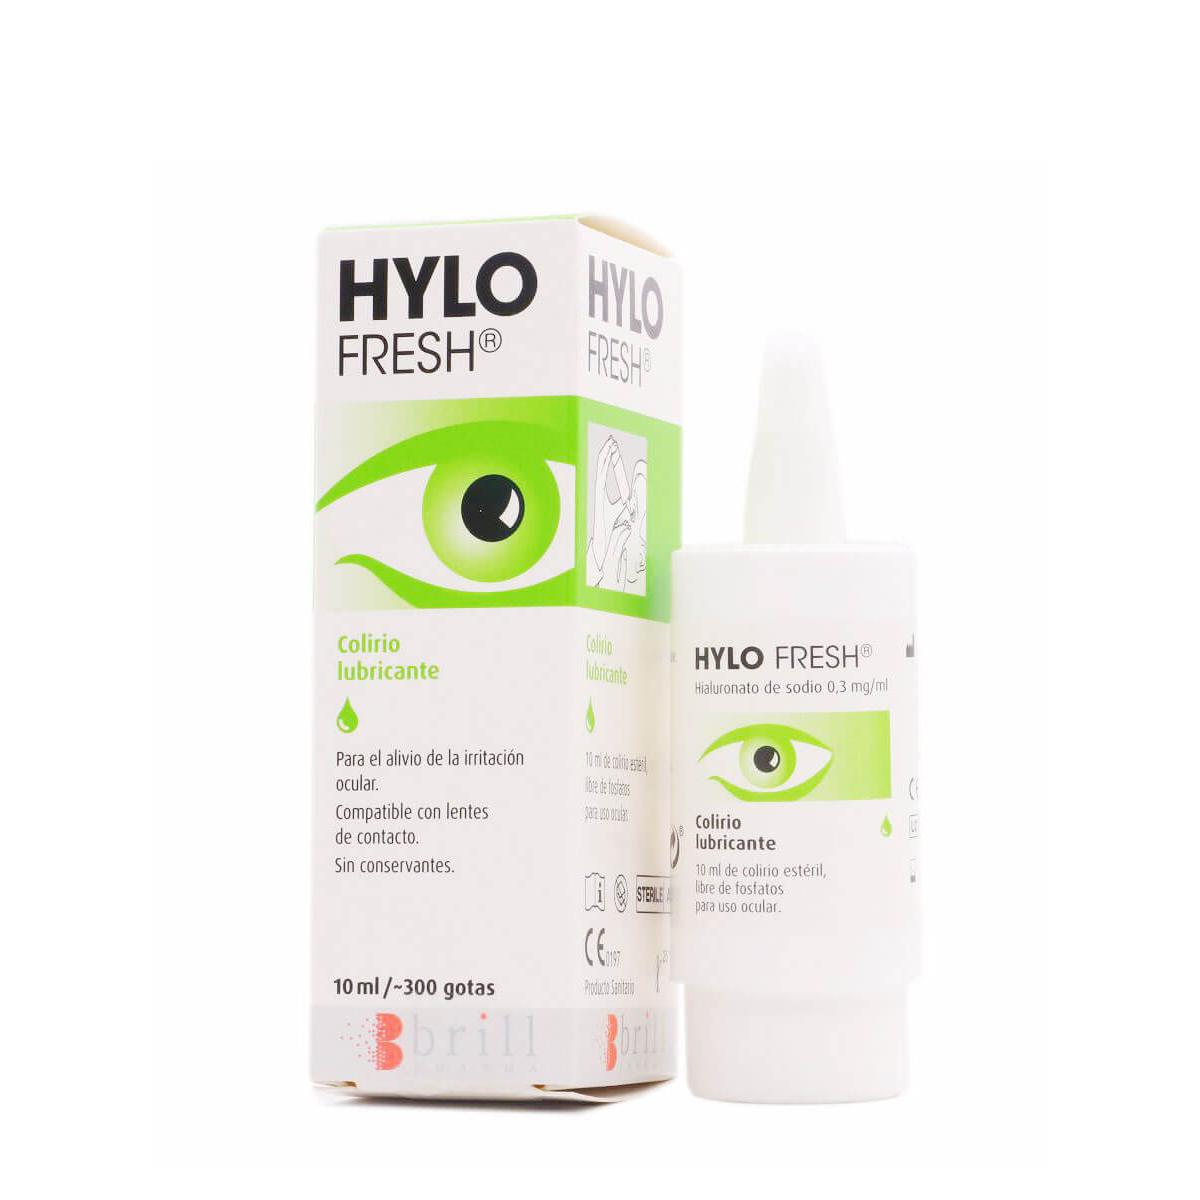 hylo dual colirio para la hidratacion ocular 10ml